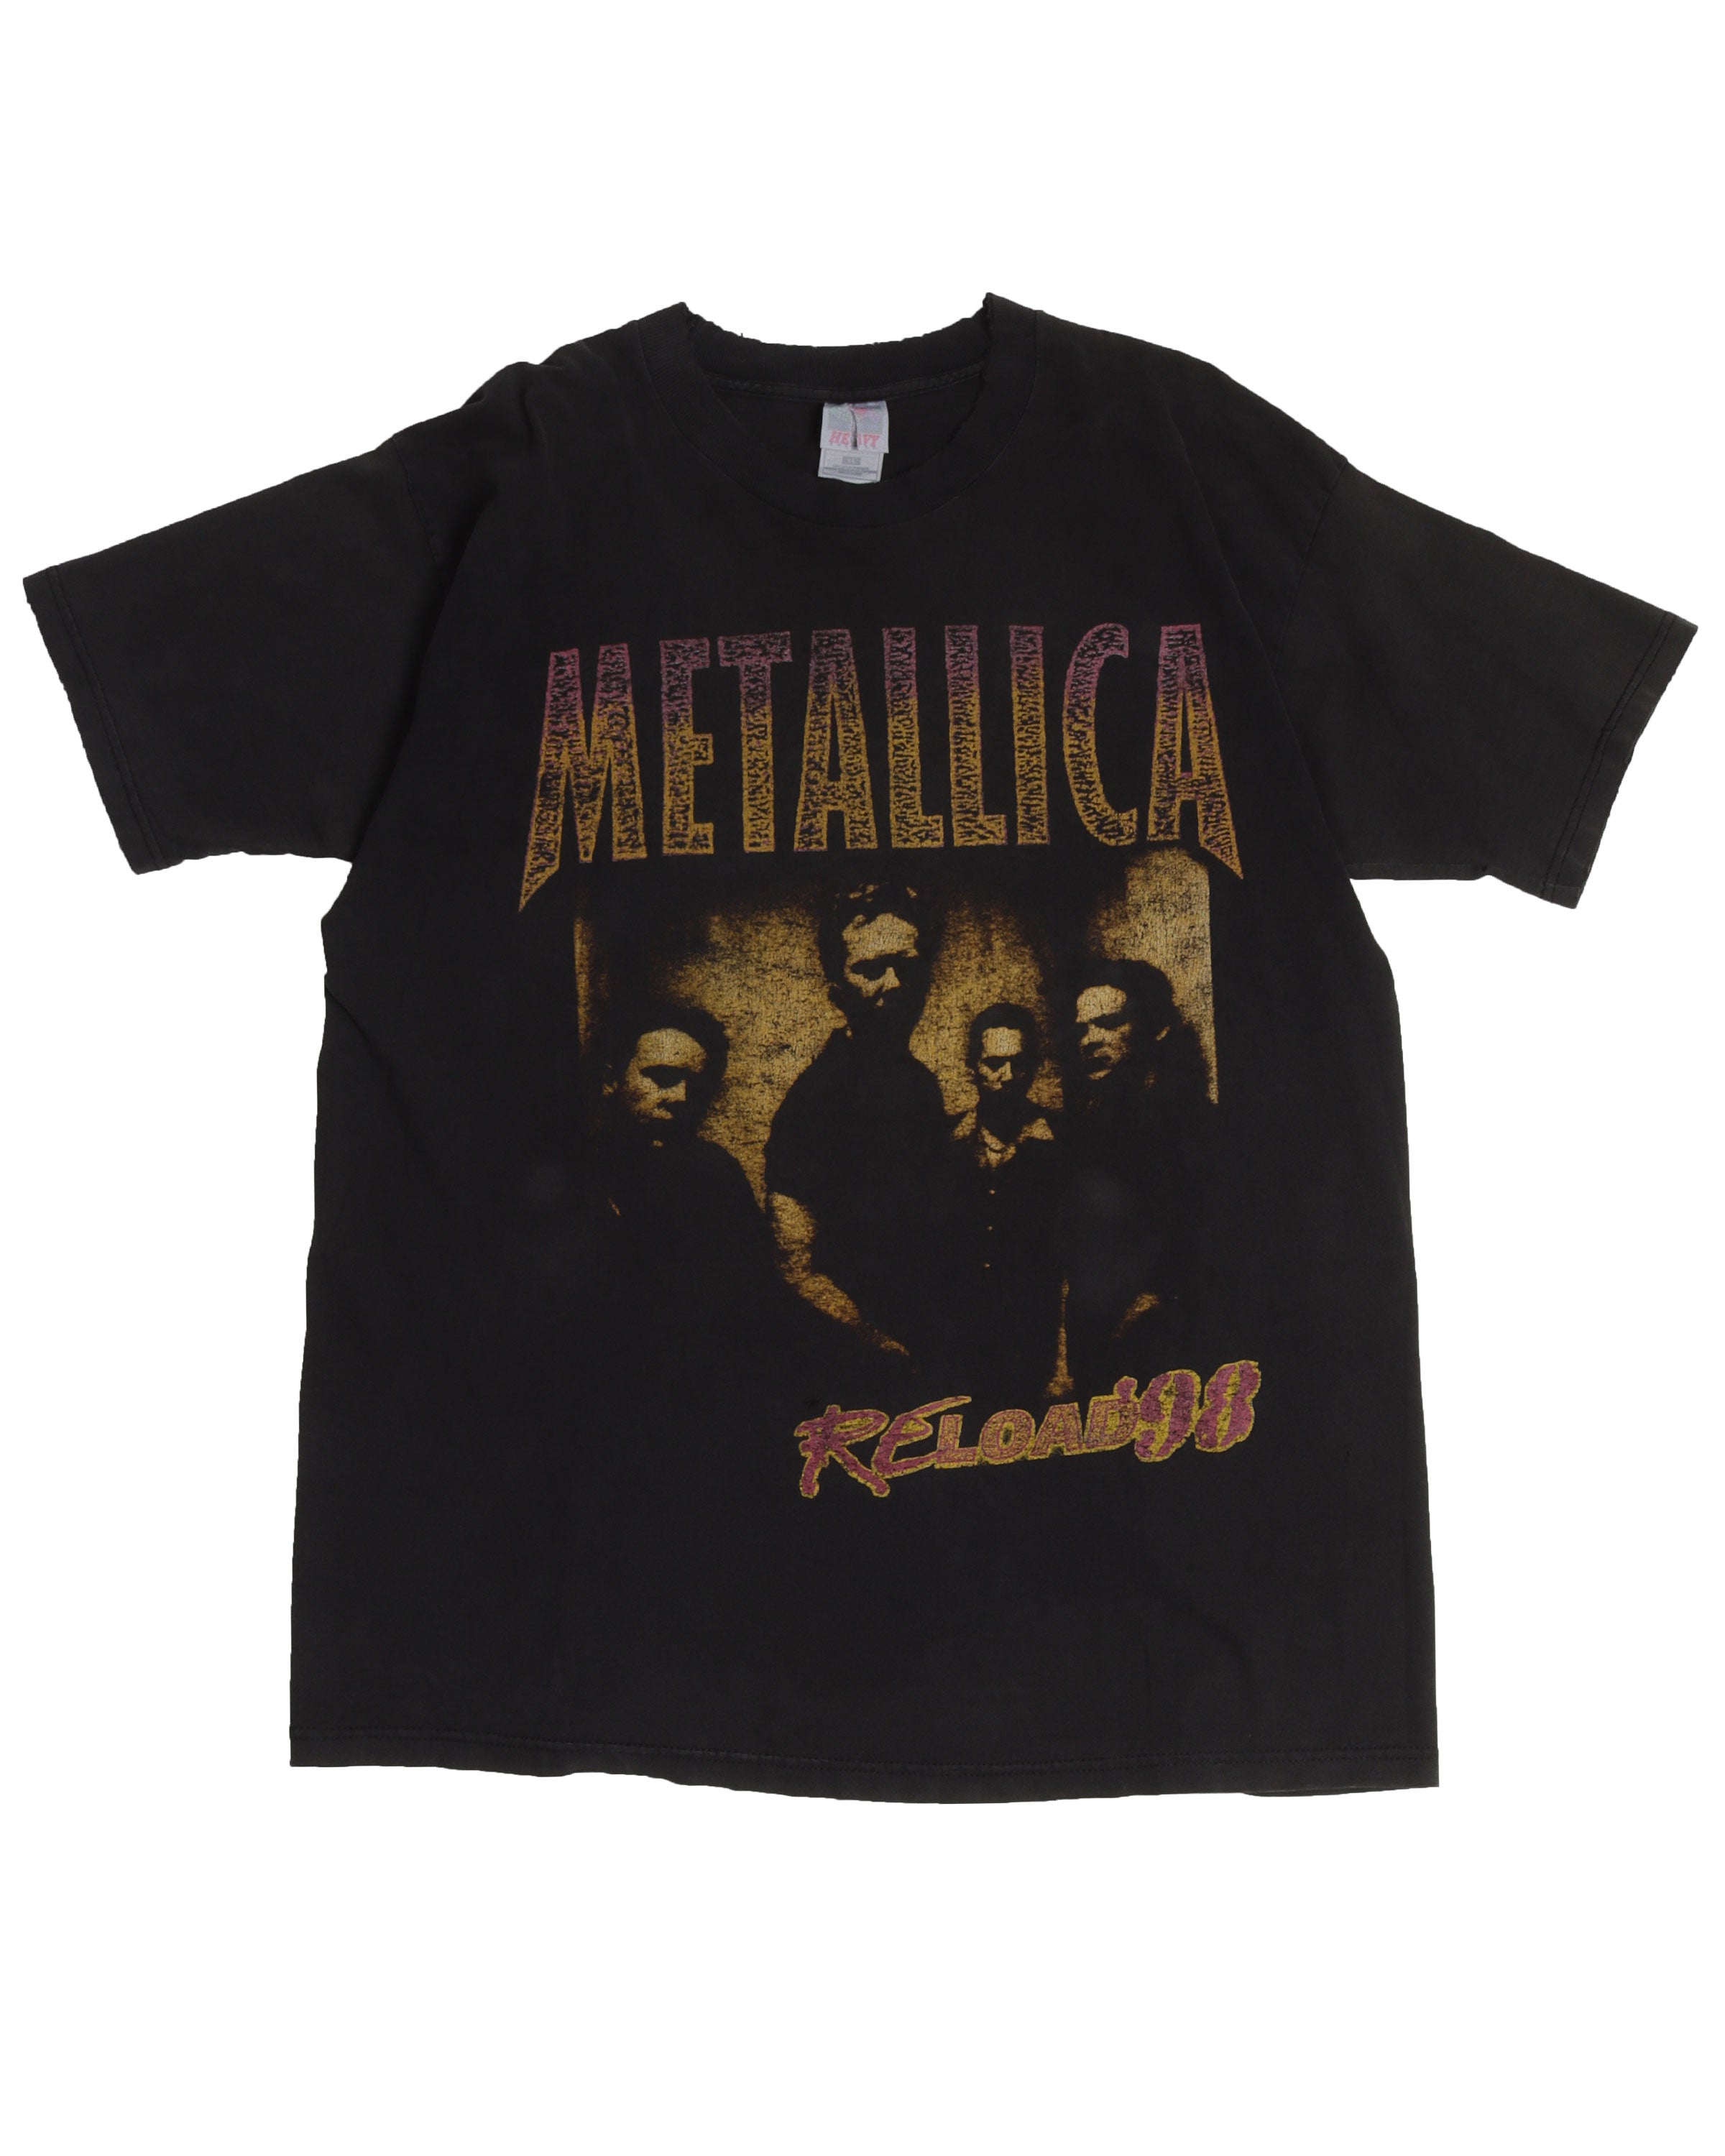 Metallica Reload 98' Tour T-Shirt